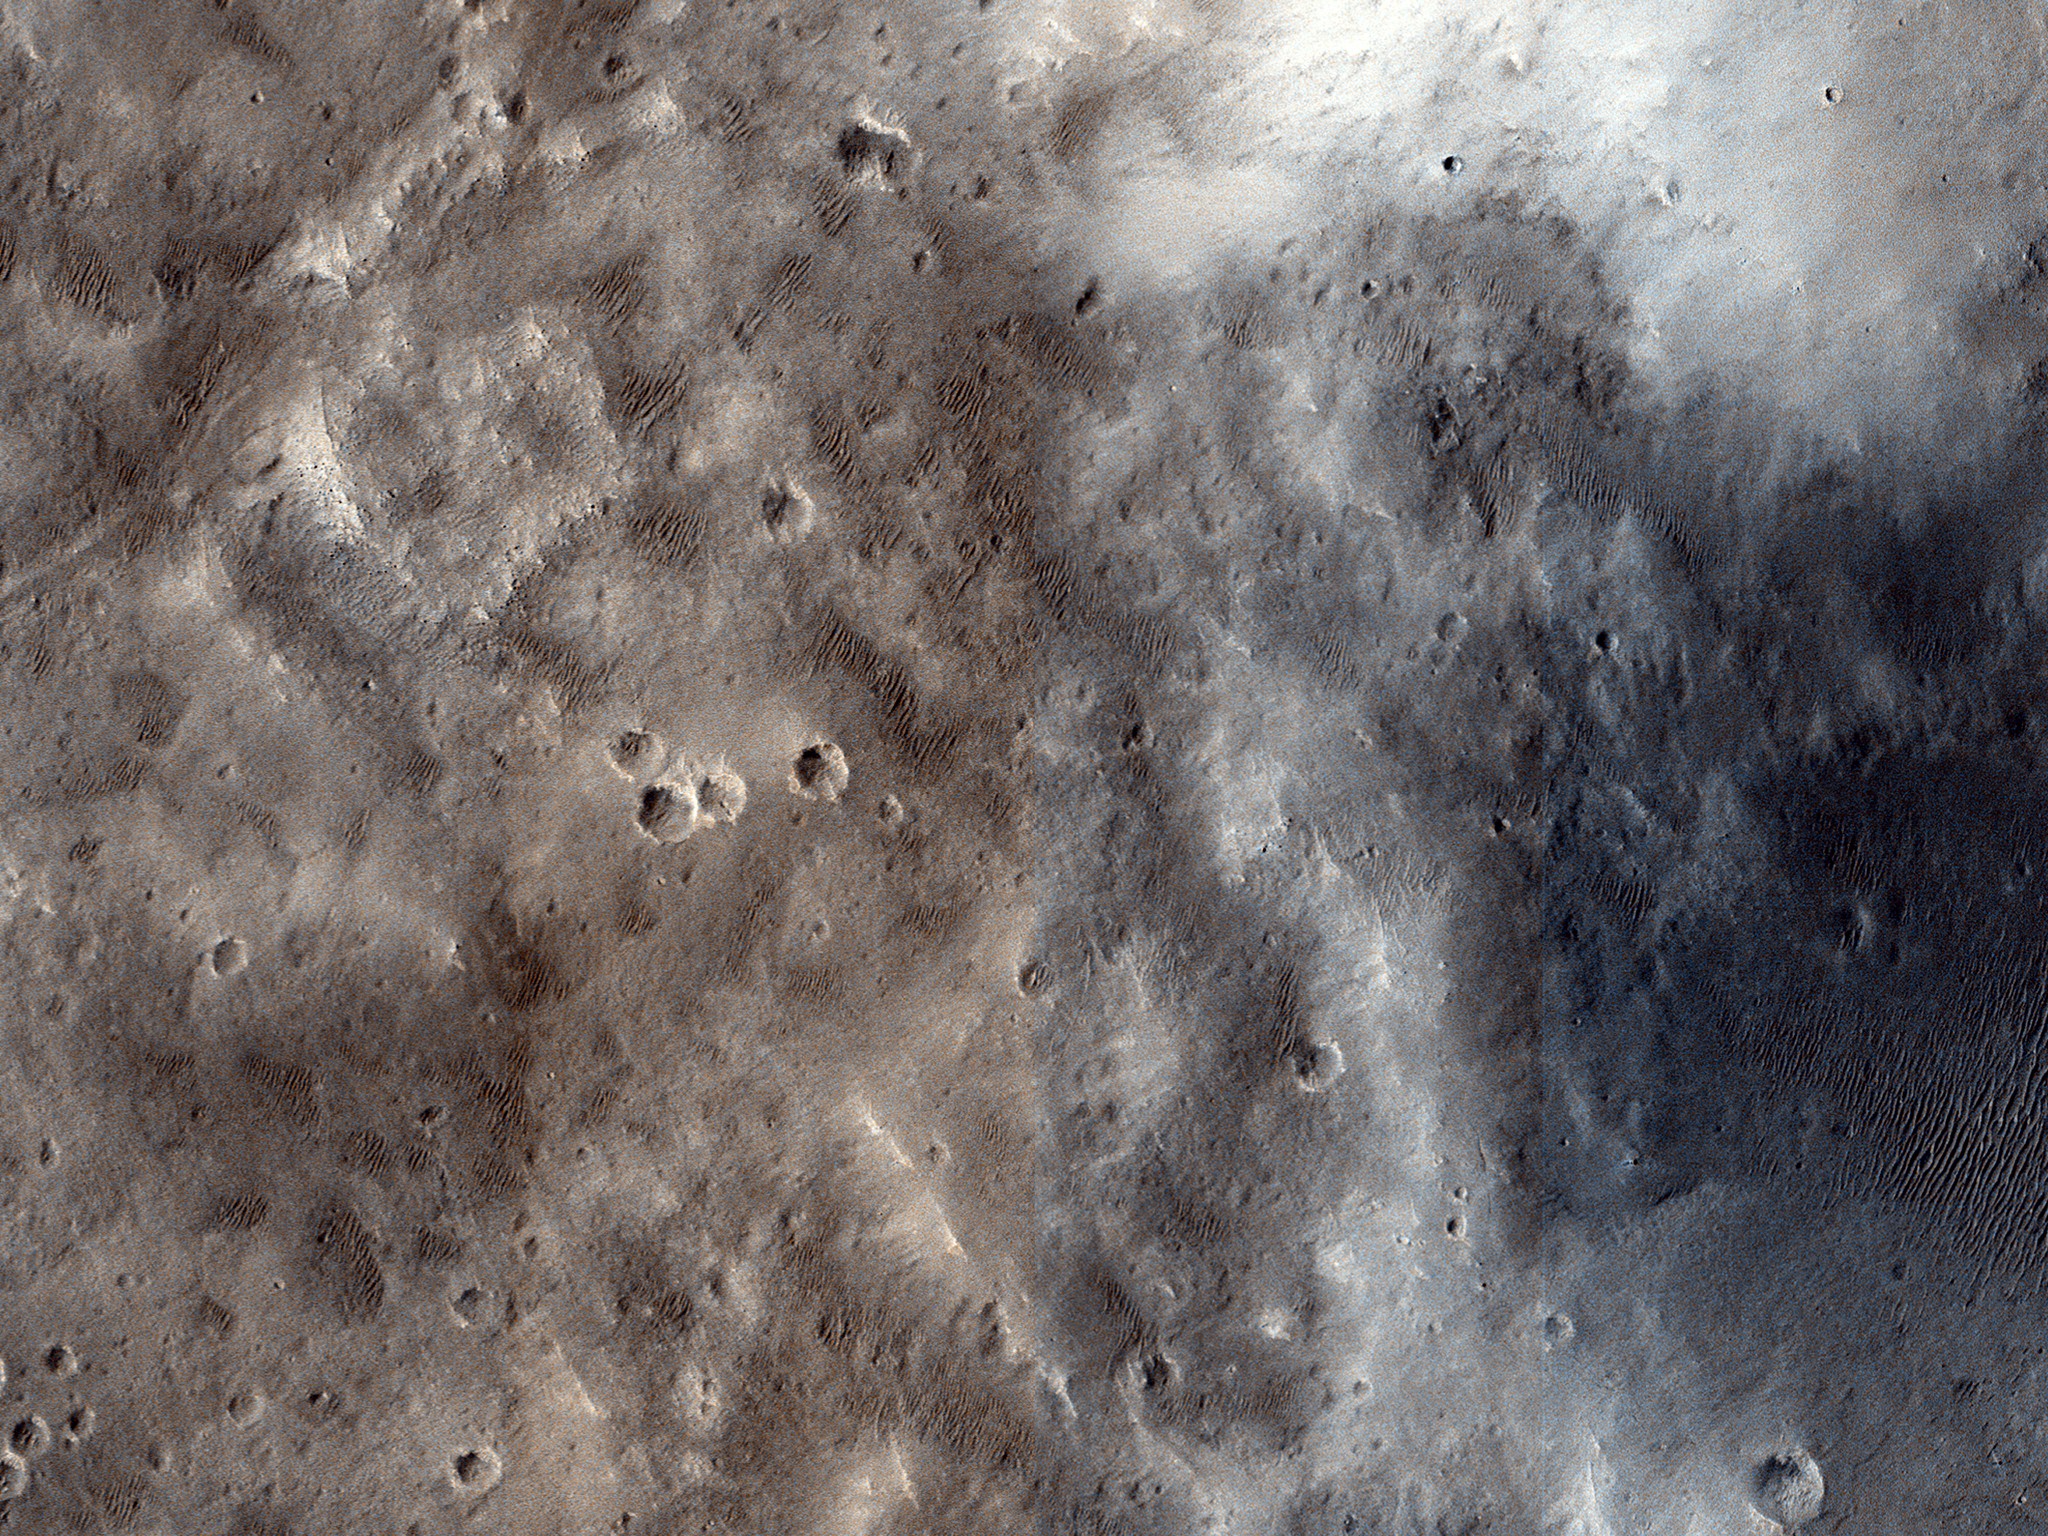  (Foto: NASA/JPL/UNIVERSITY OF ARIZONA)